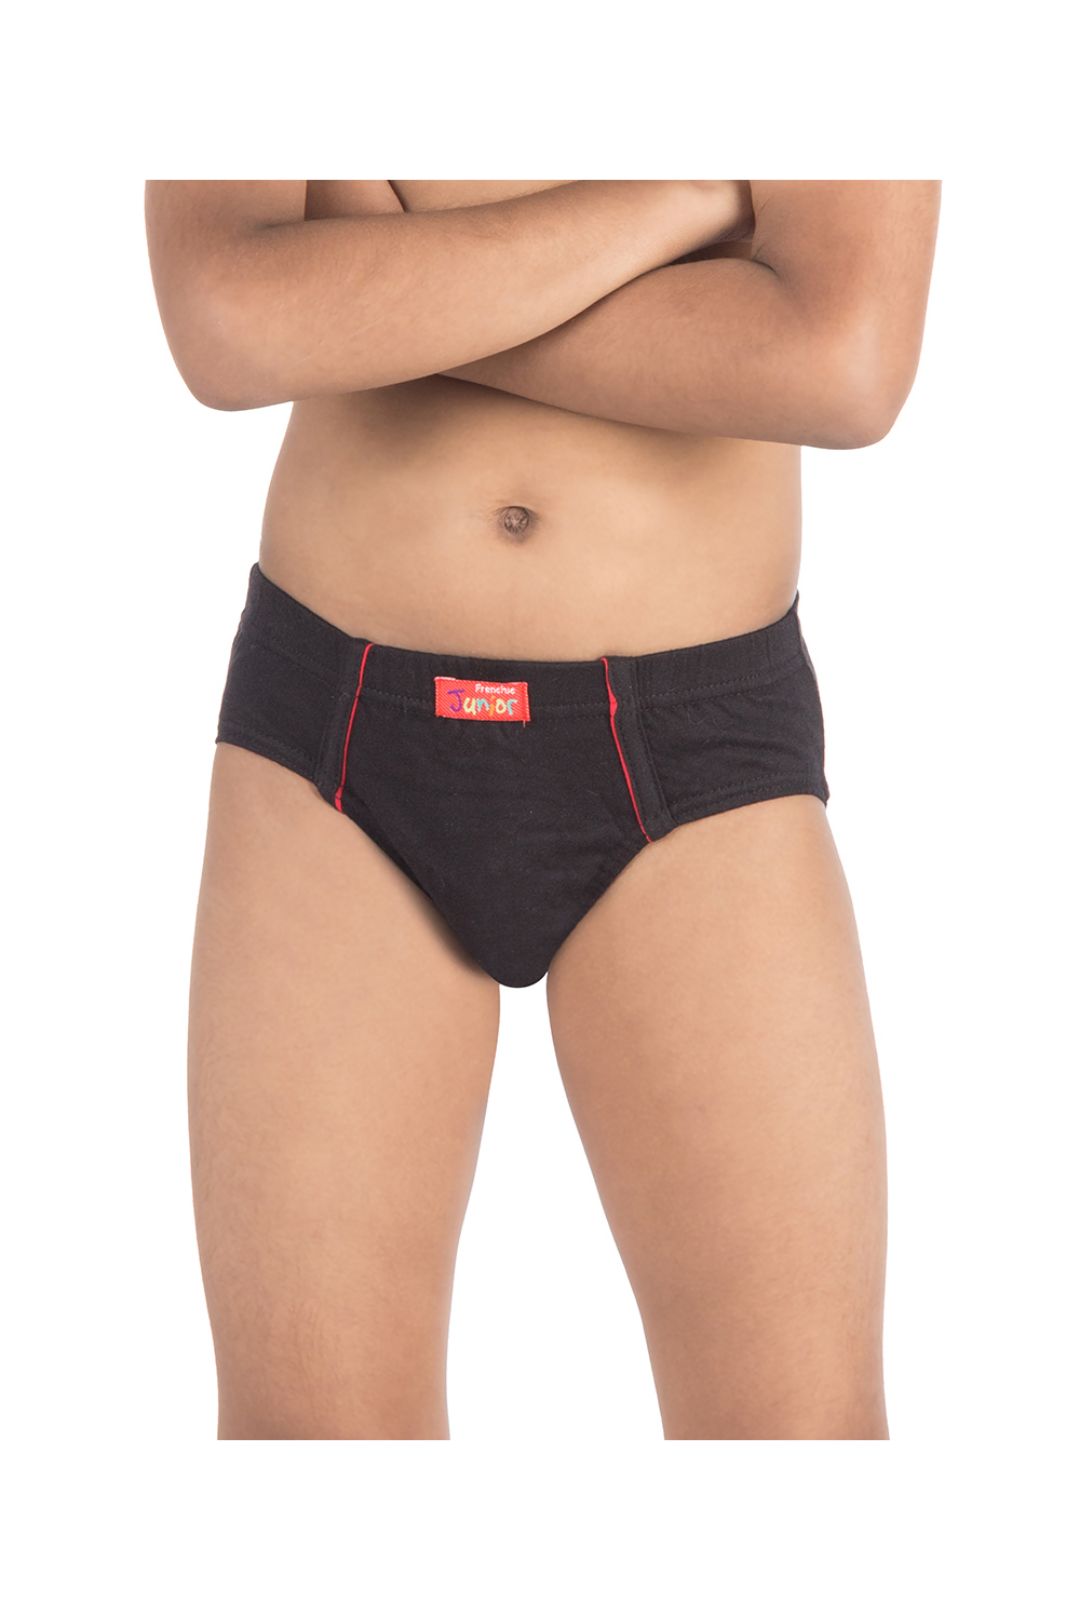 10no. VIP Frenchie Pro Men's Underwear-100% Combed Cotton Stylish & Comfort